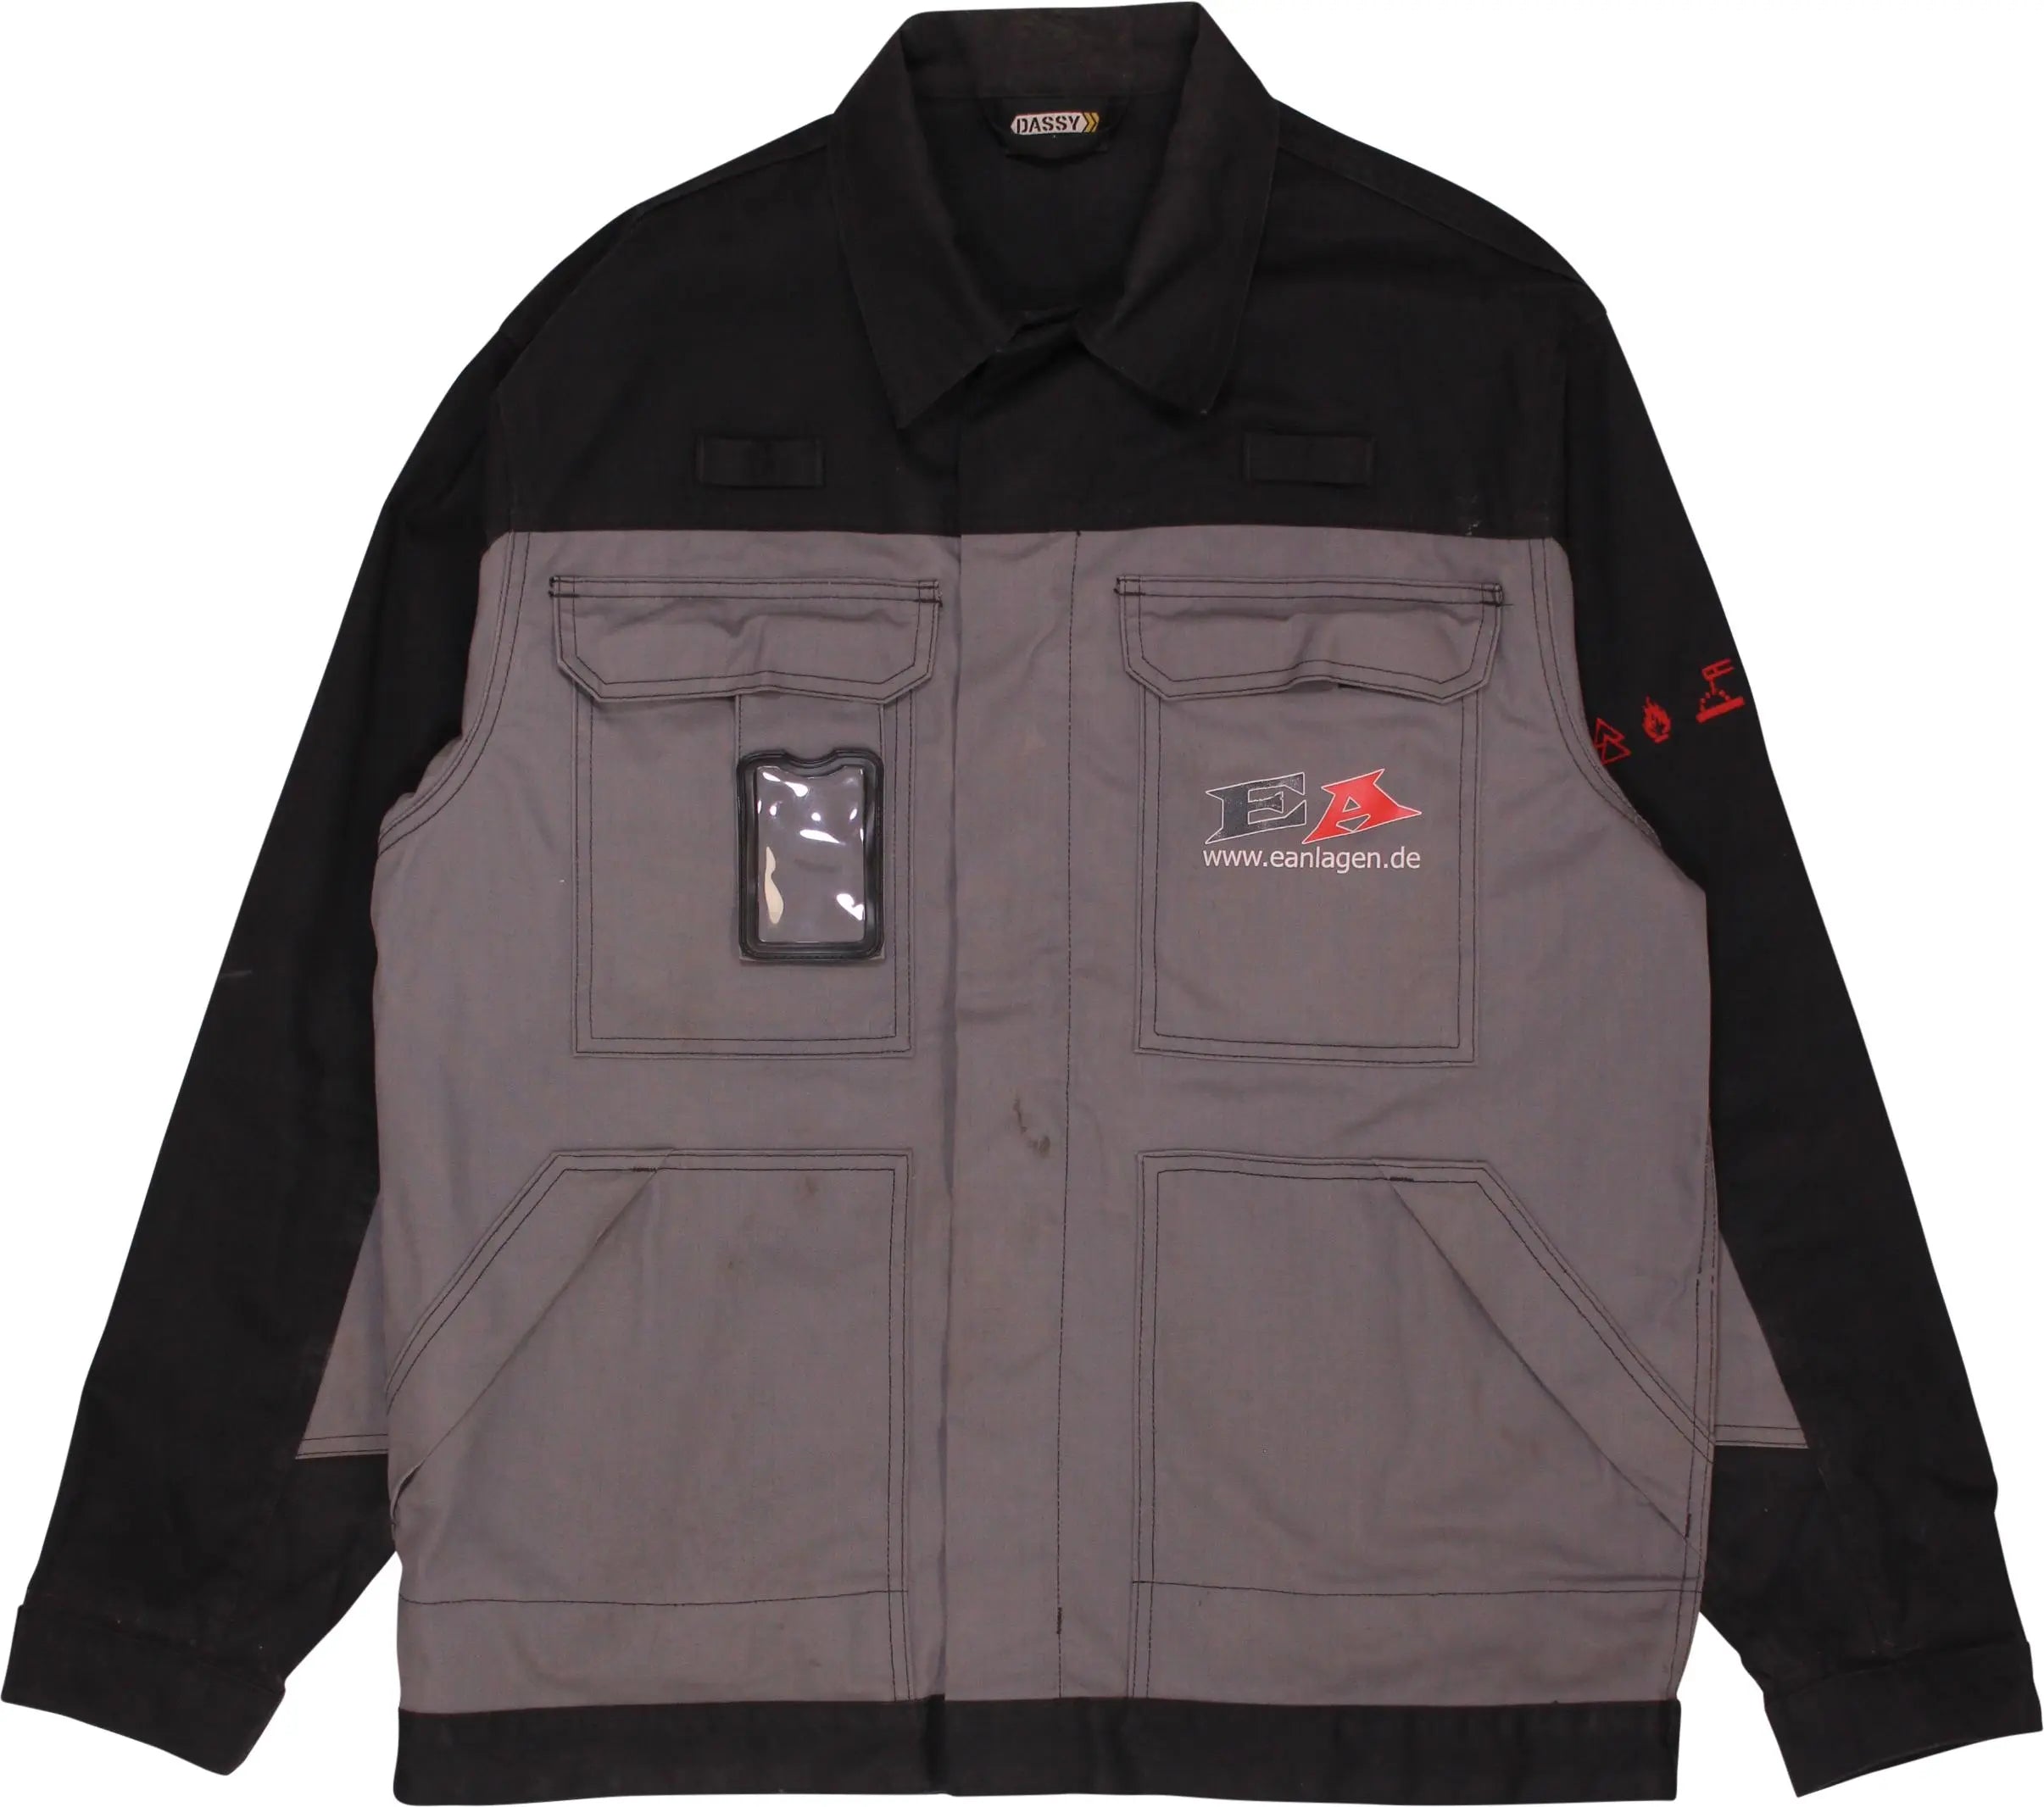 Eanlagen - Workwear Jacket- ThriftTale.com - Vintage and second handclothing